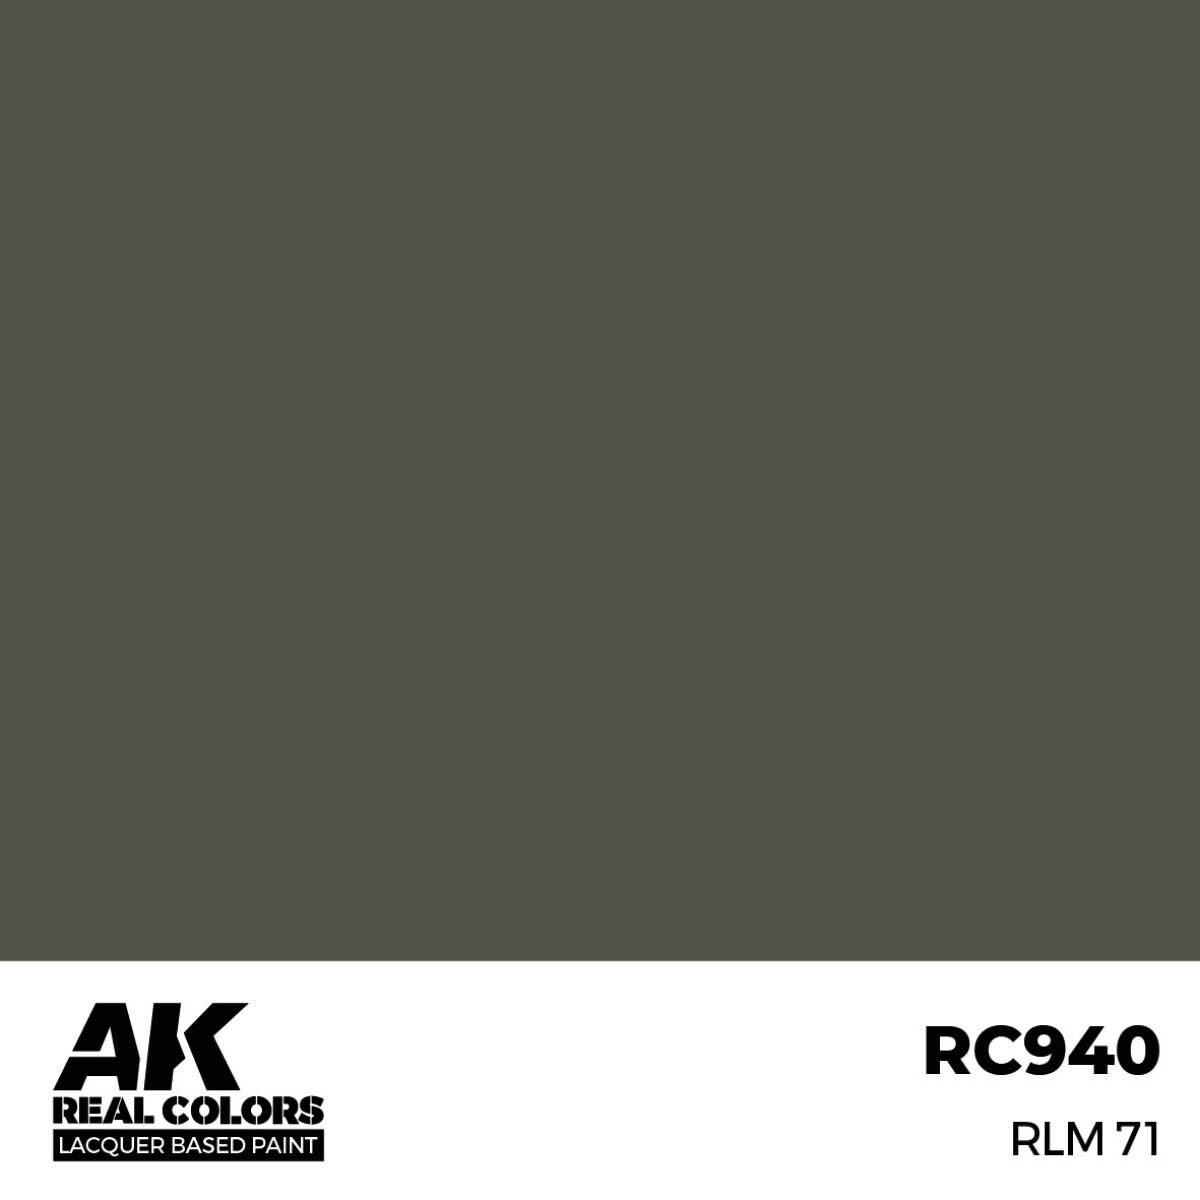 AK RC940 Real Colors RLM 71 17 ml.